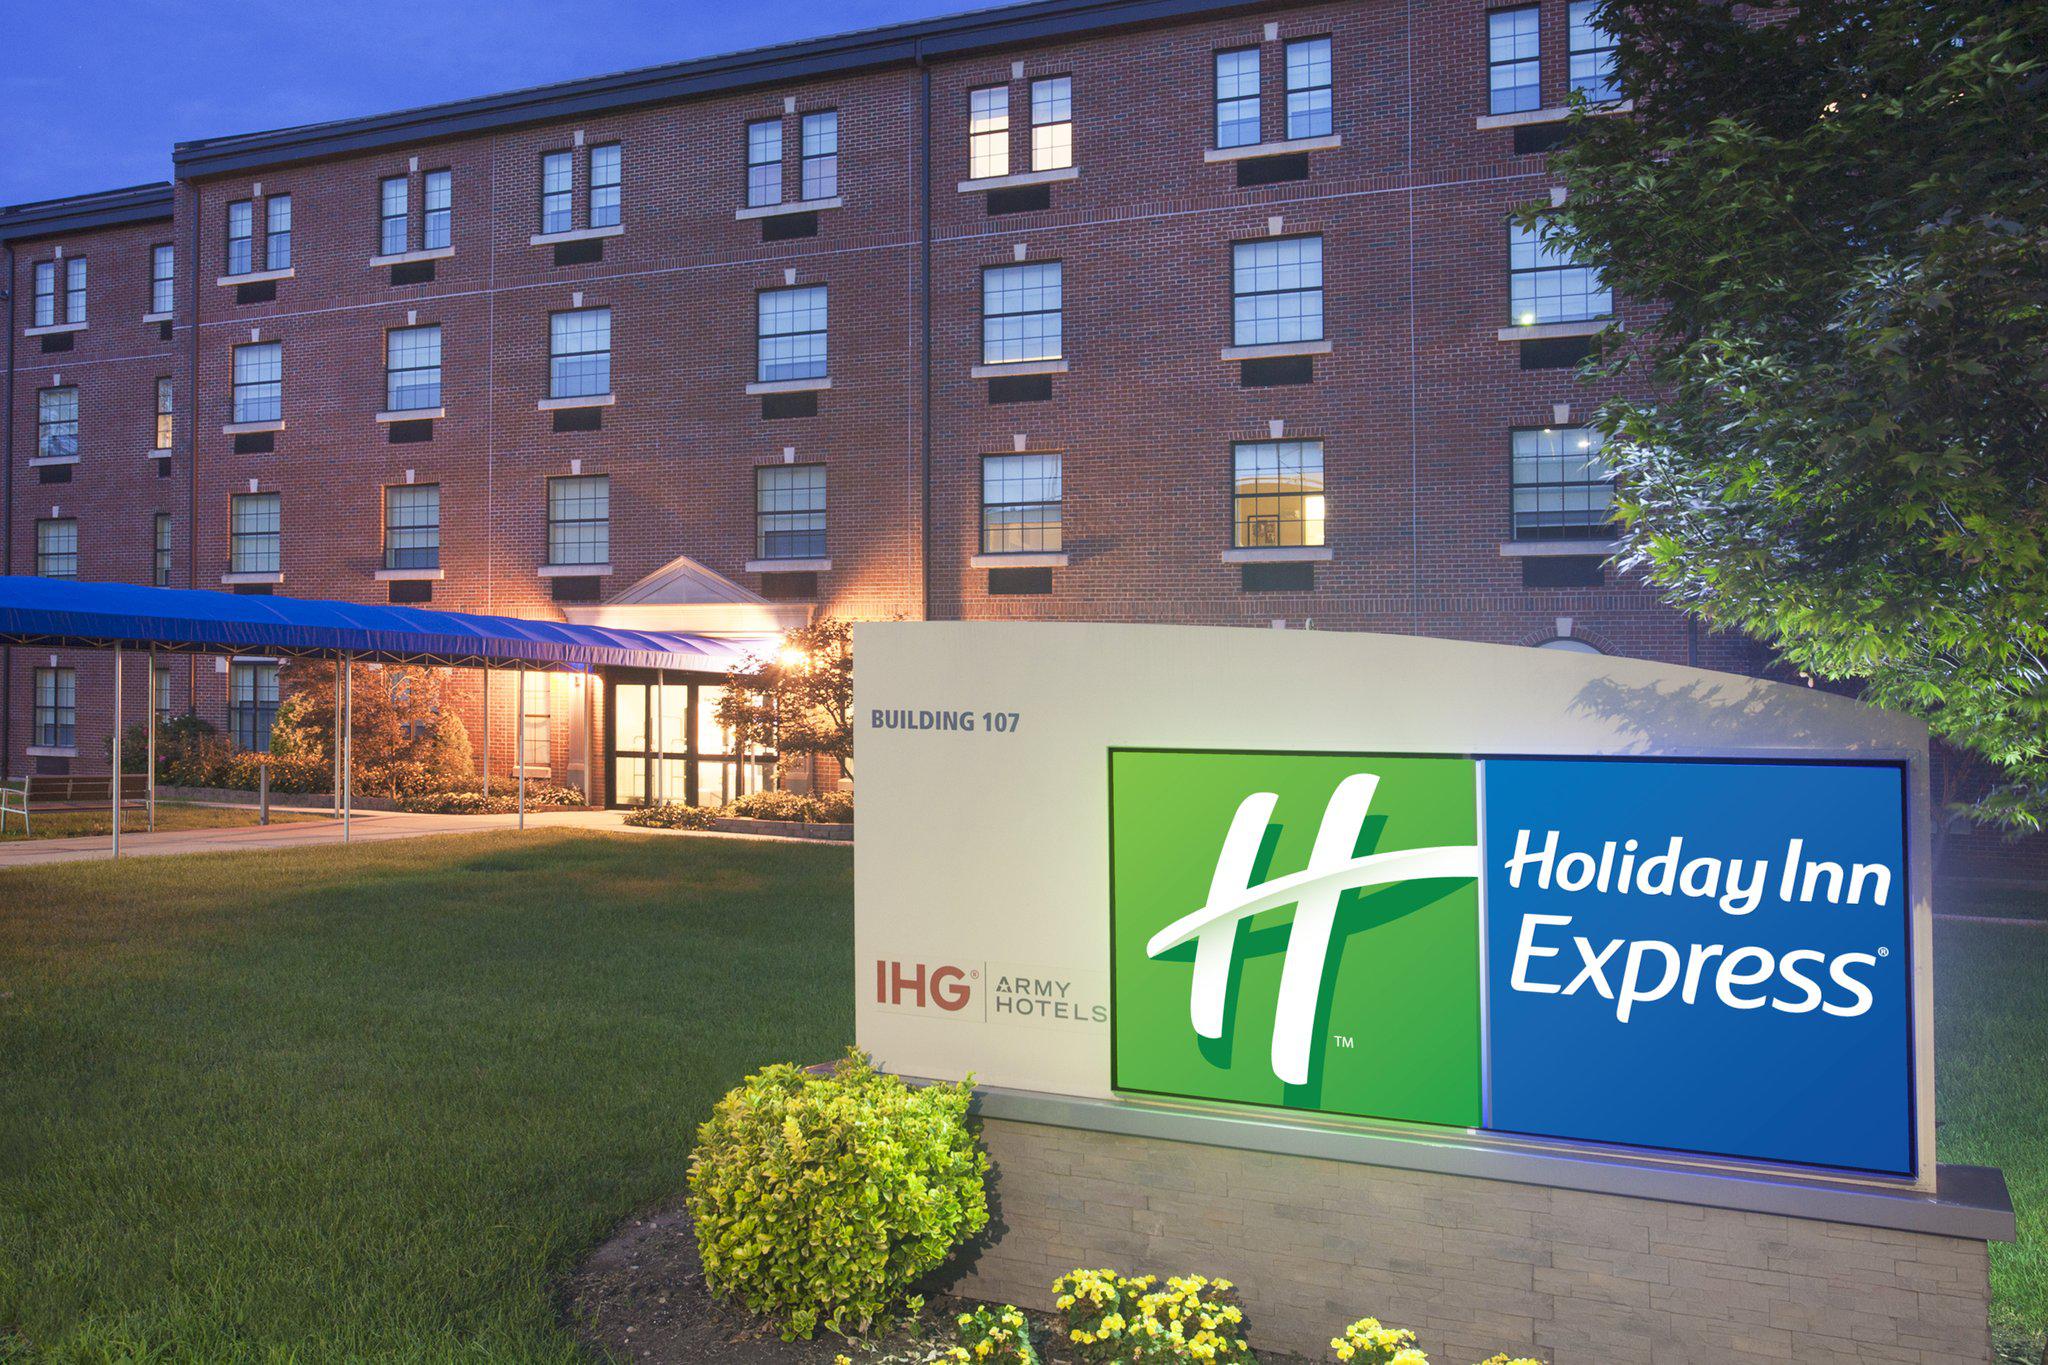 Holiday Inn Express Building 107 - Brooklyn, NY 11252 - (718)439-2340 | ShowMeLocal.com